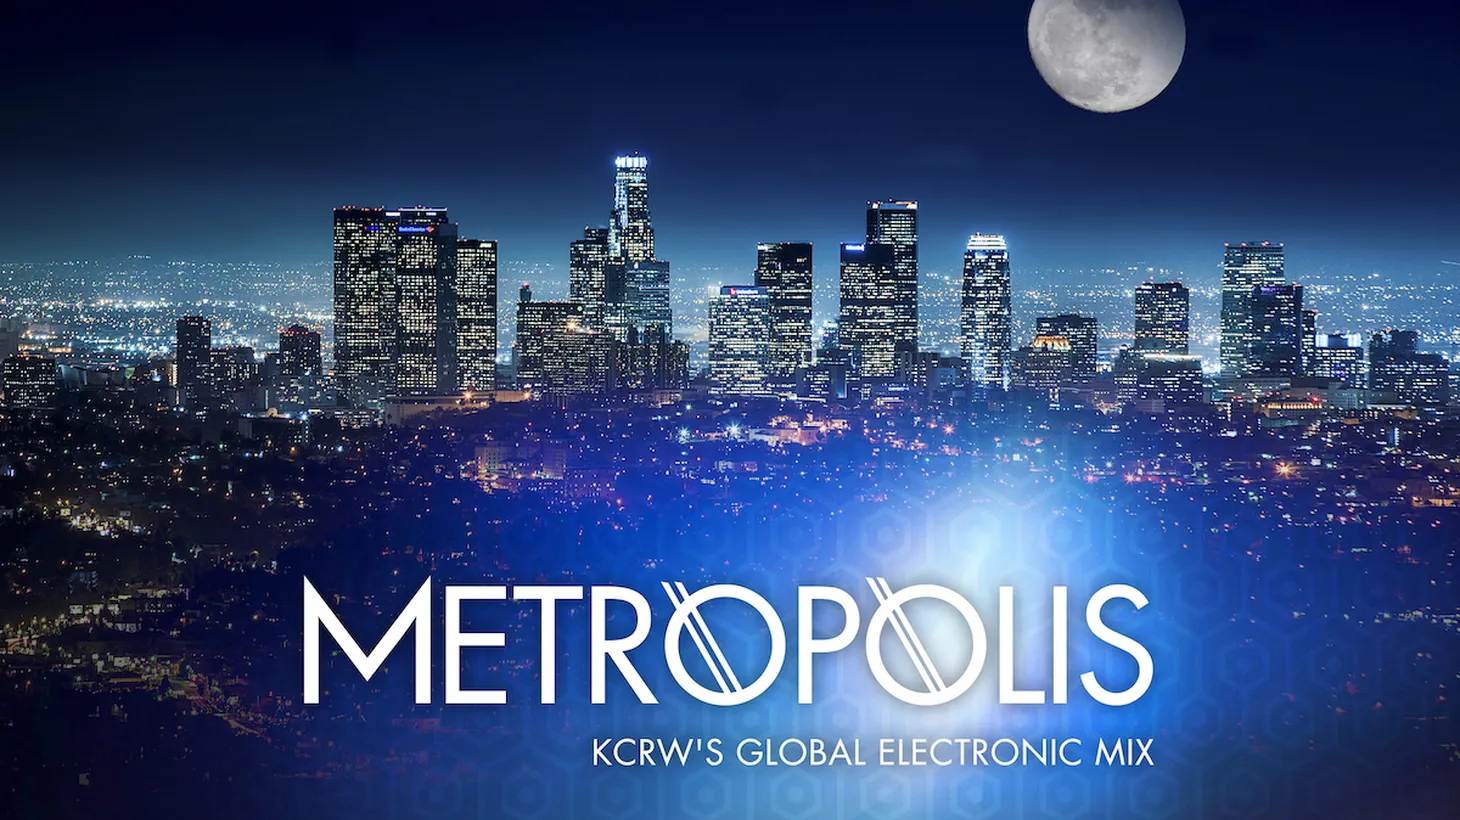 Metropolis playlist, September 25, 2021.